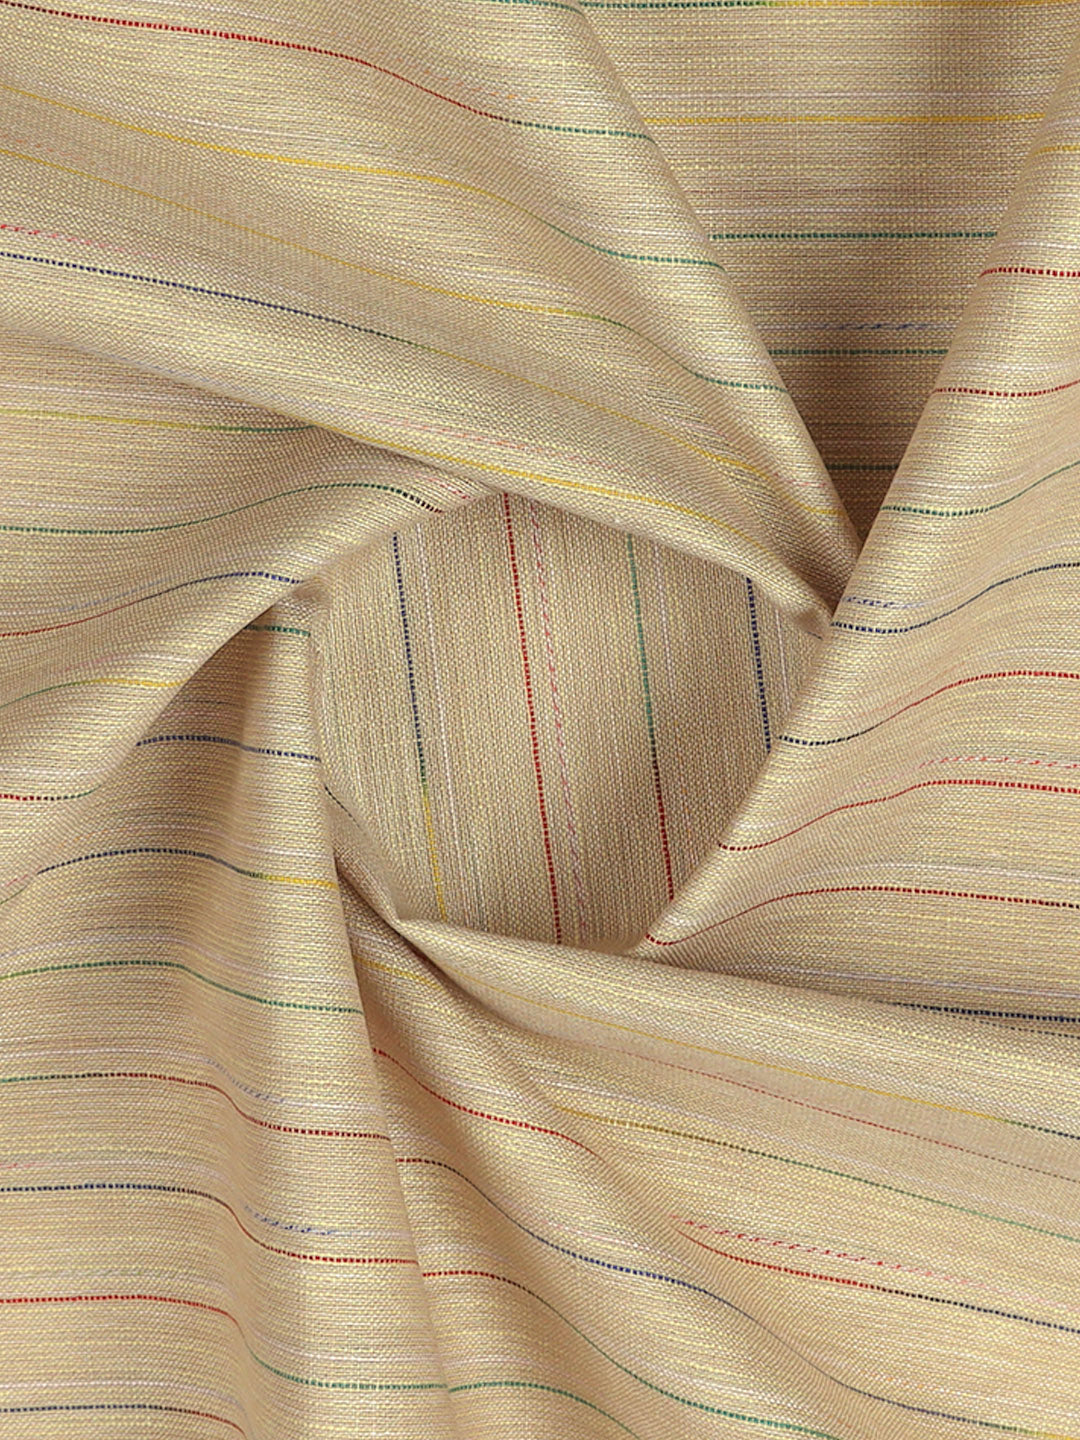 Cotton Striped Sandal Colour Shirting Fabric Galaxy Art